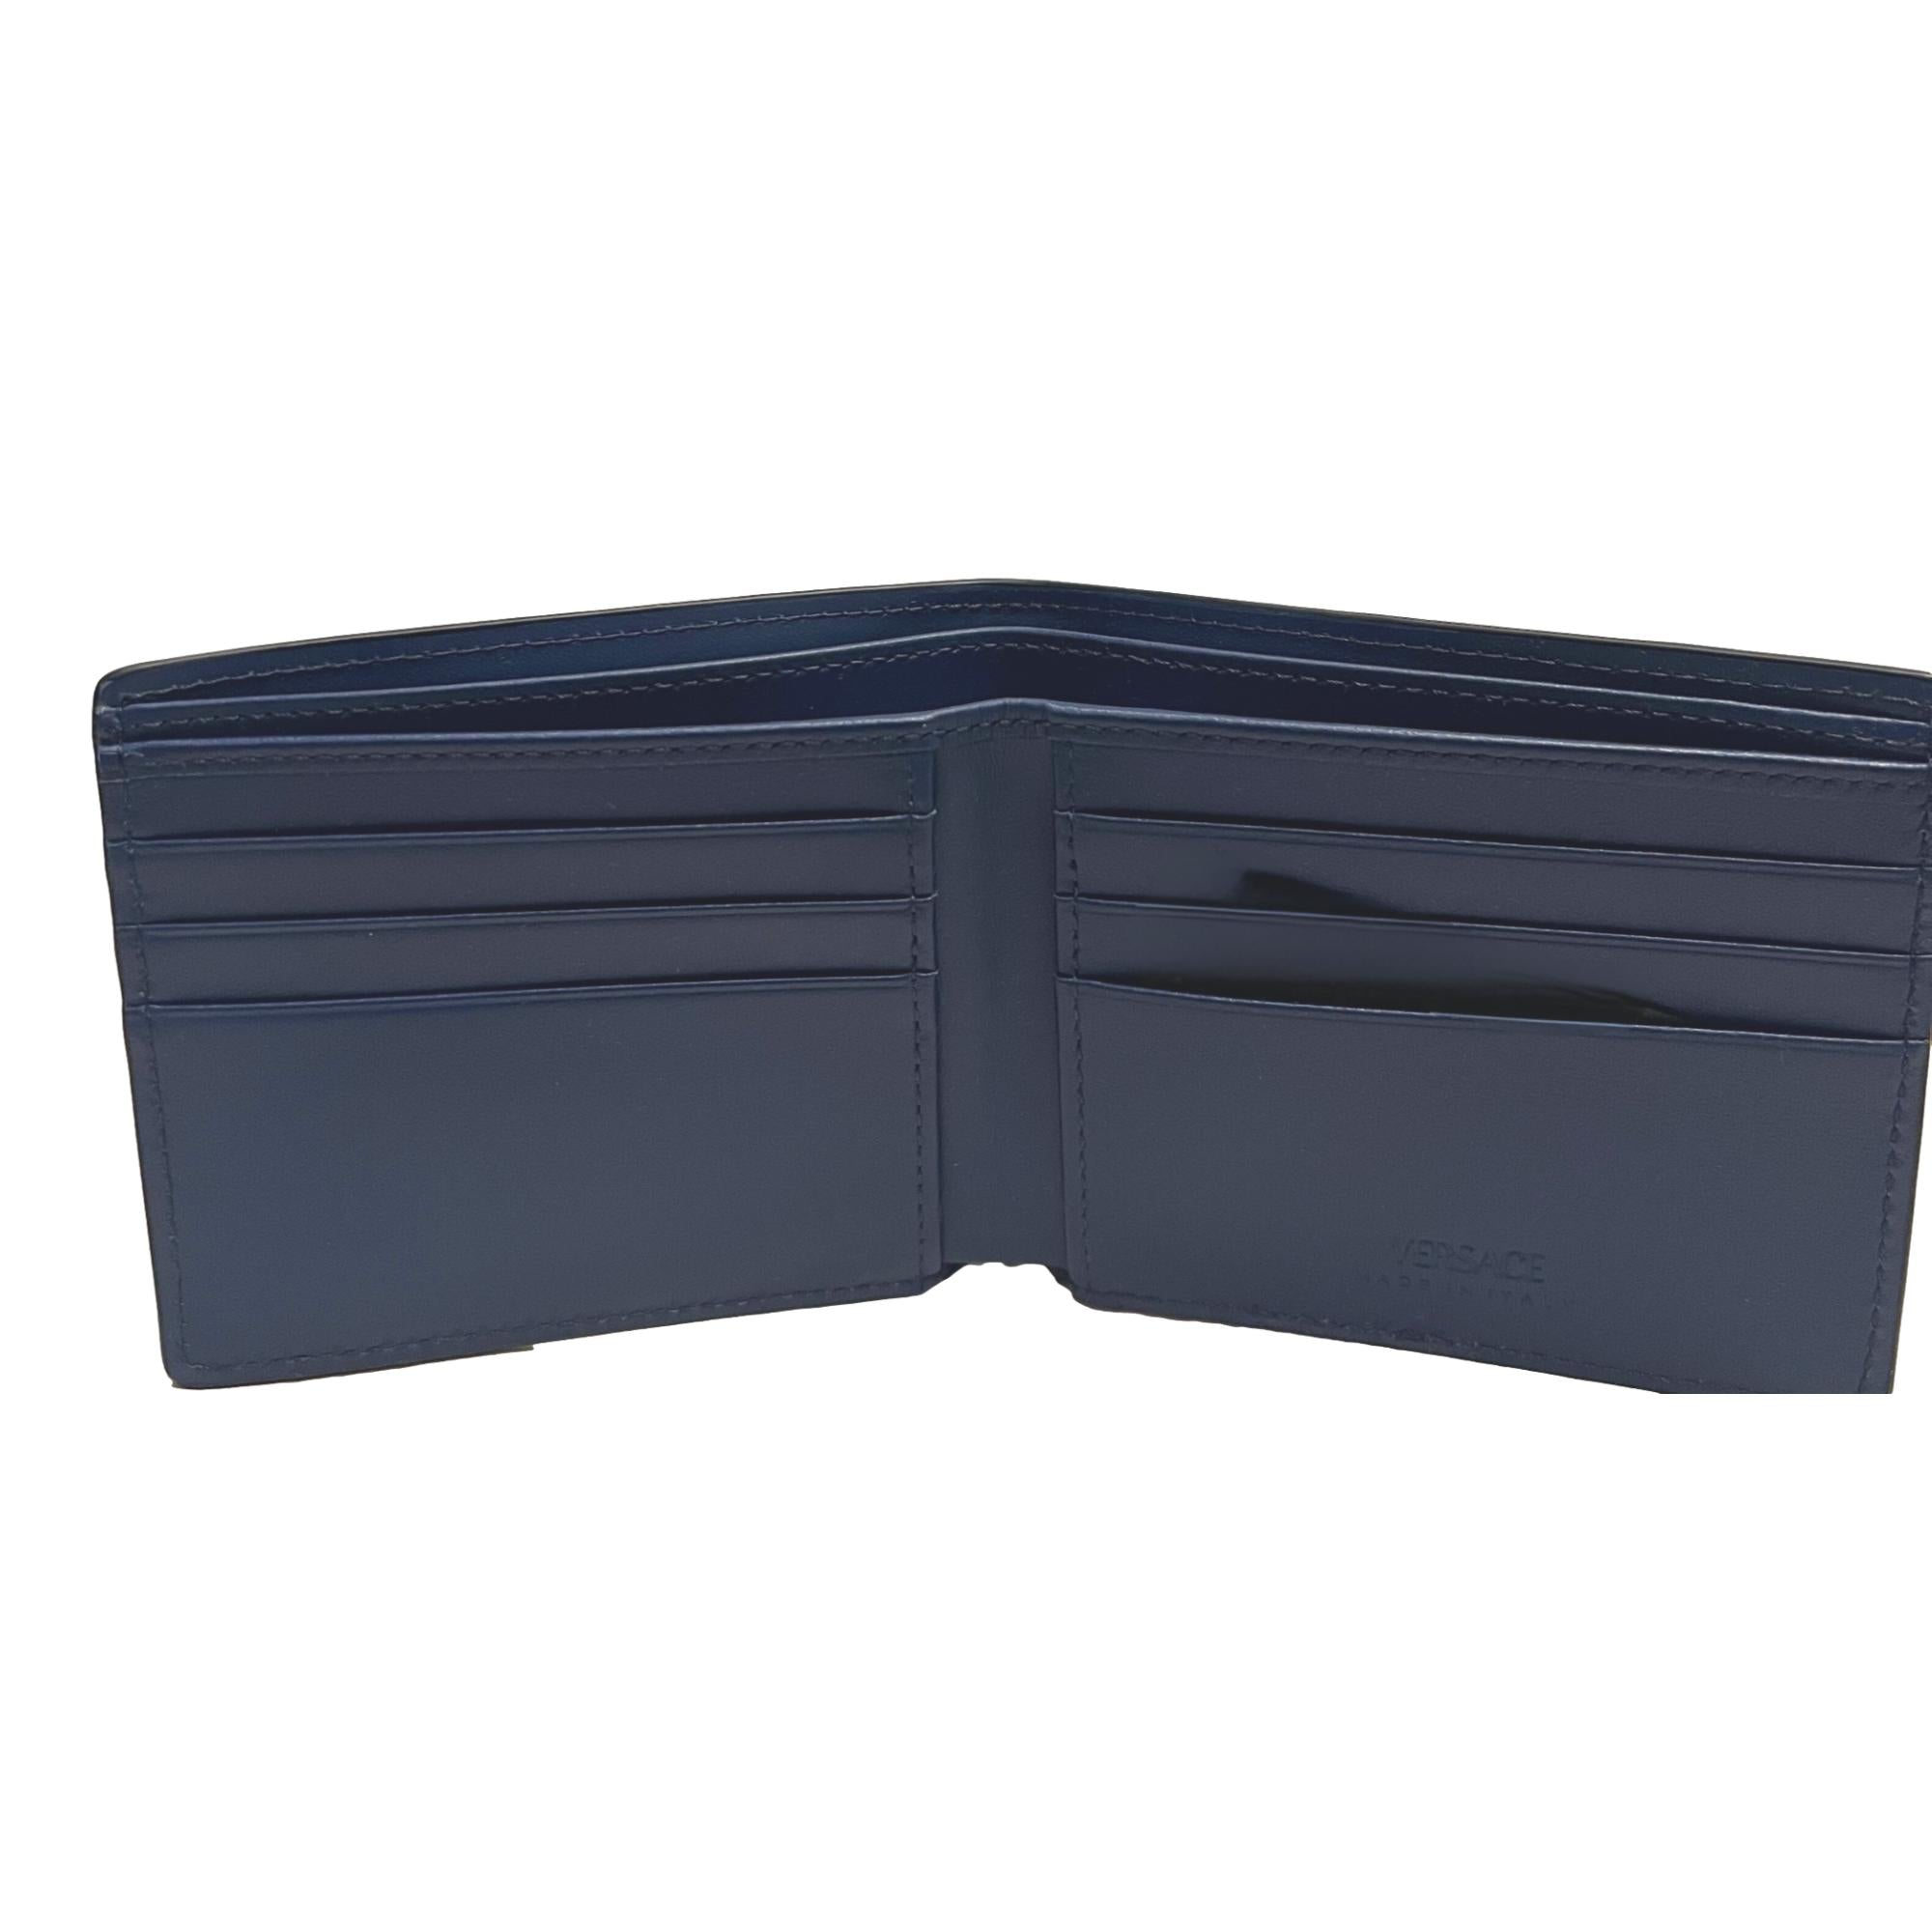 Versace La Medusa Logo Plaque Navy Blue Calf Leather Bifold Wallet